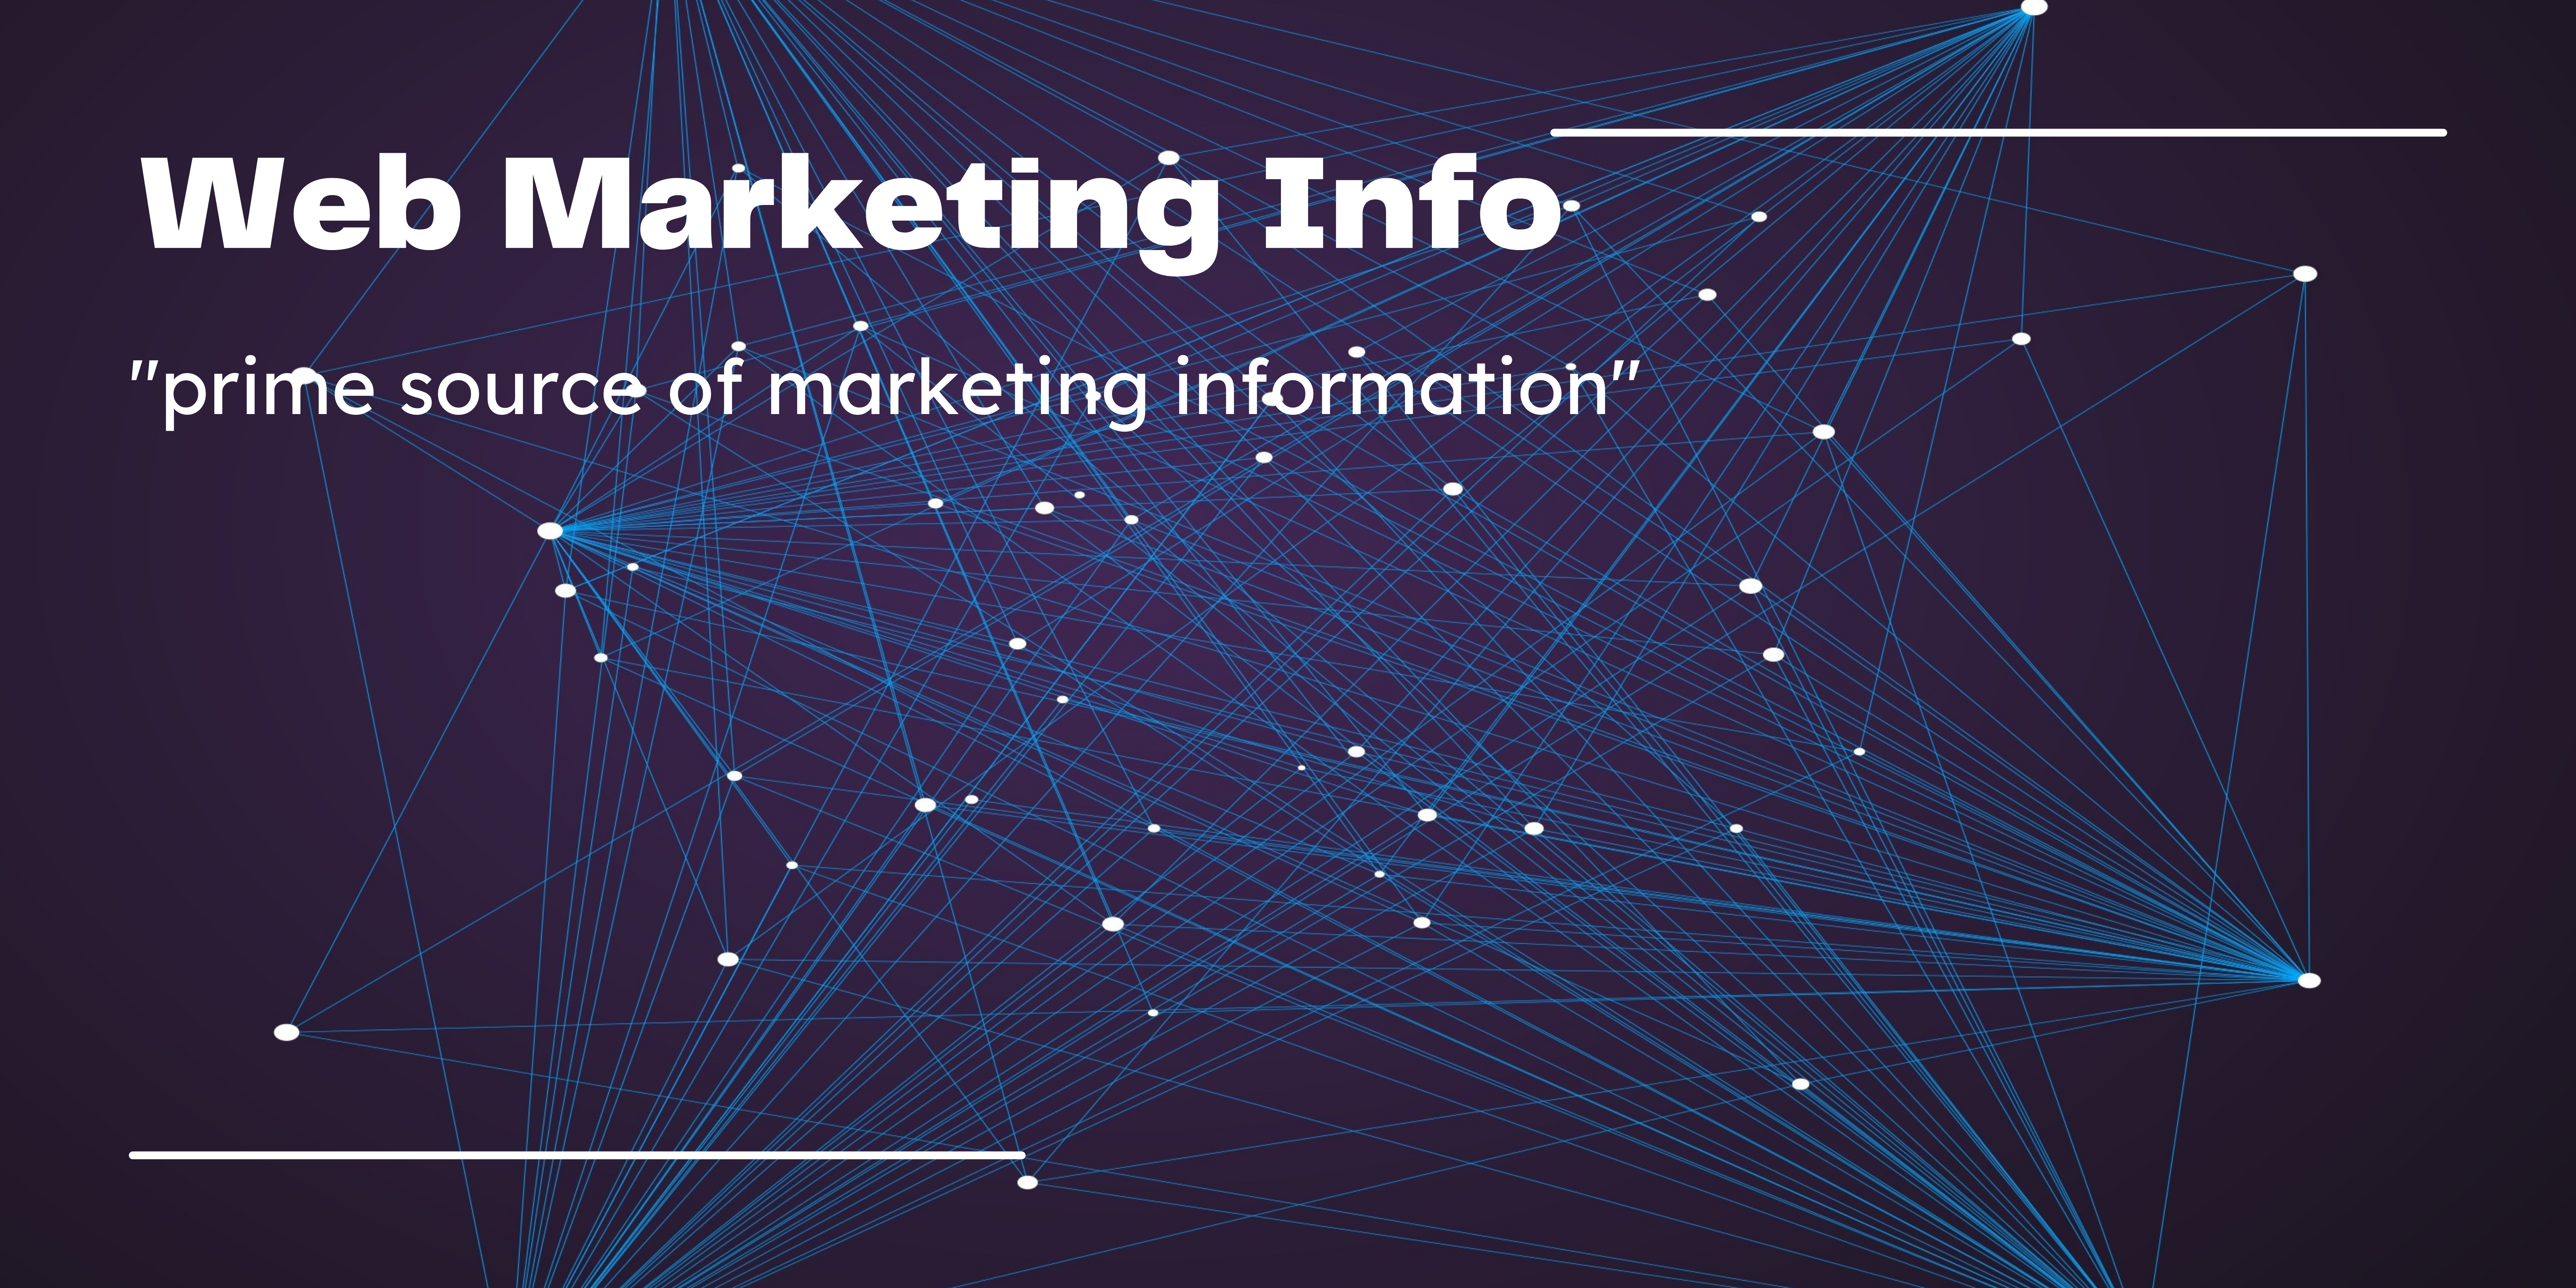 Web Marketing Info Cover Image